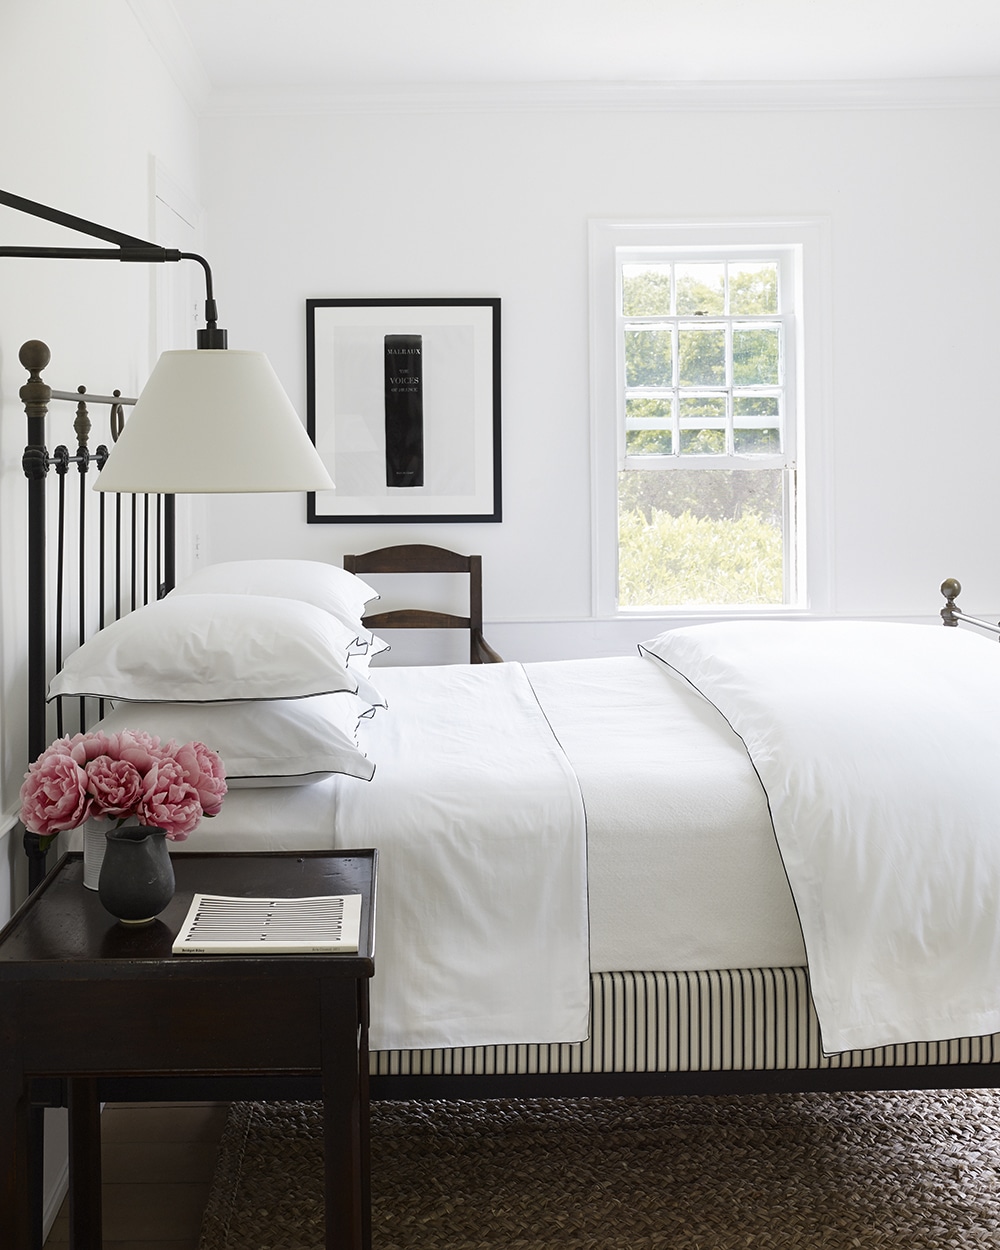 Mark Cunningham designed Southampton home -bedroom, bedroom design, bedroom decor, black and white, black and white bedroom